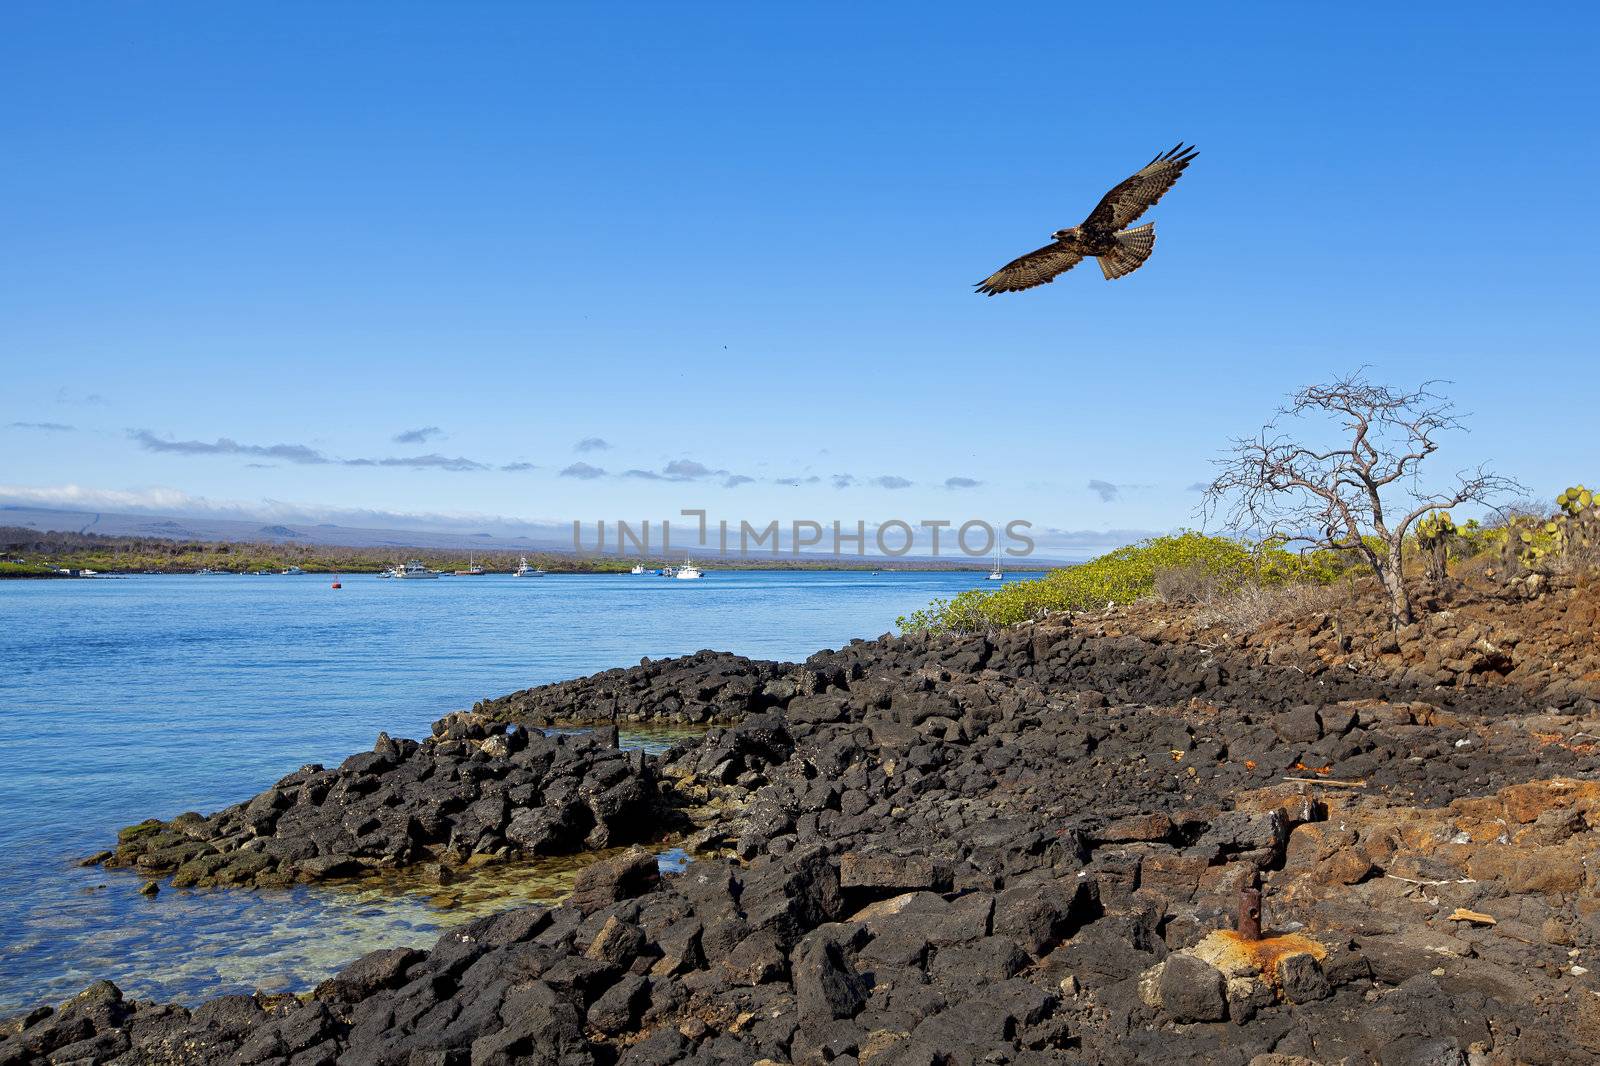 Galapagos landscape by kjorgen